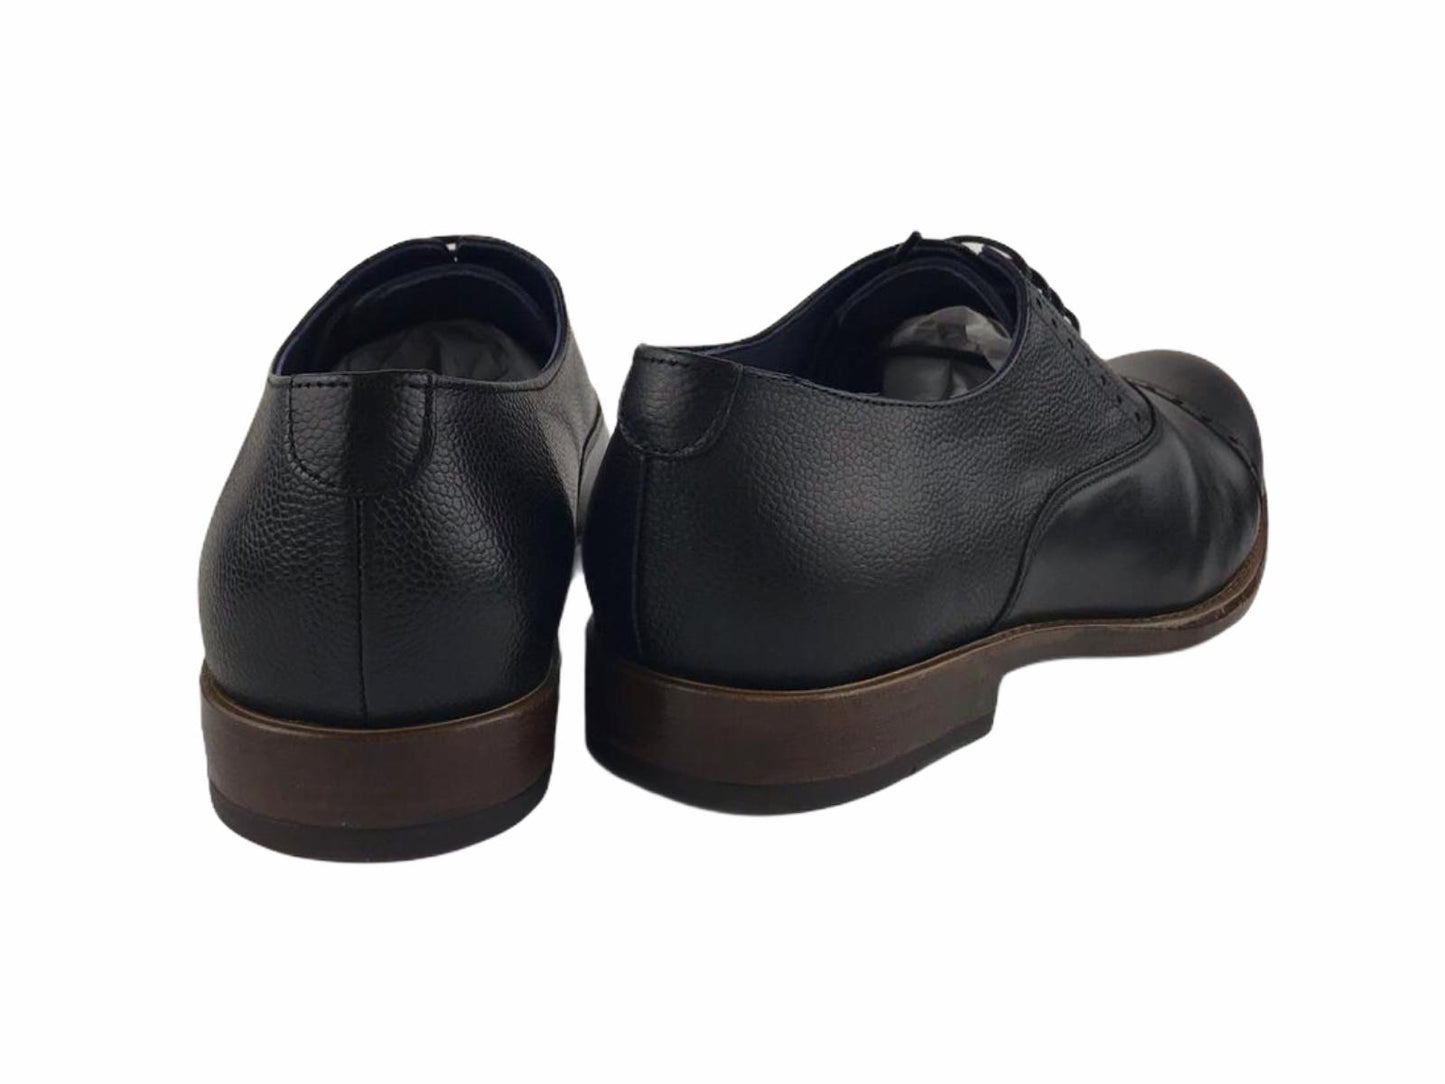 Tolino | Zapato hombre vestir Toledano negro